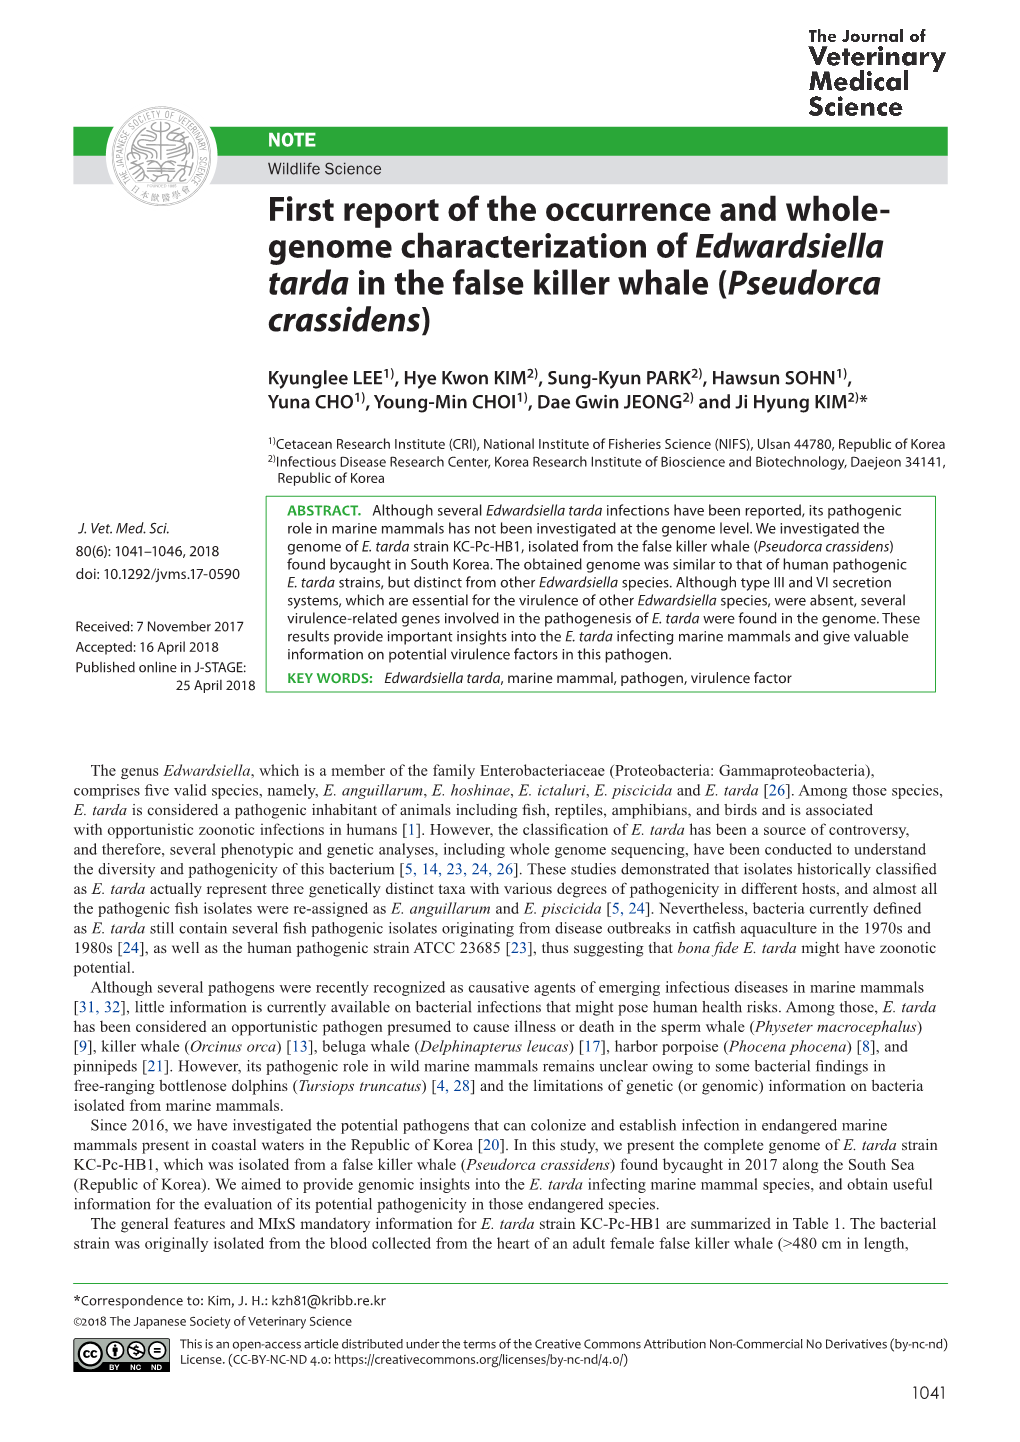 Genome Characterization of Edwardsiella Tarda in the False Killer Whale (Pseudorca Crassidens)